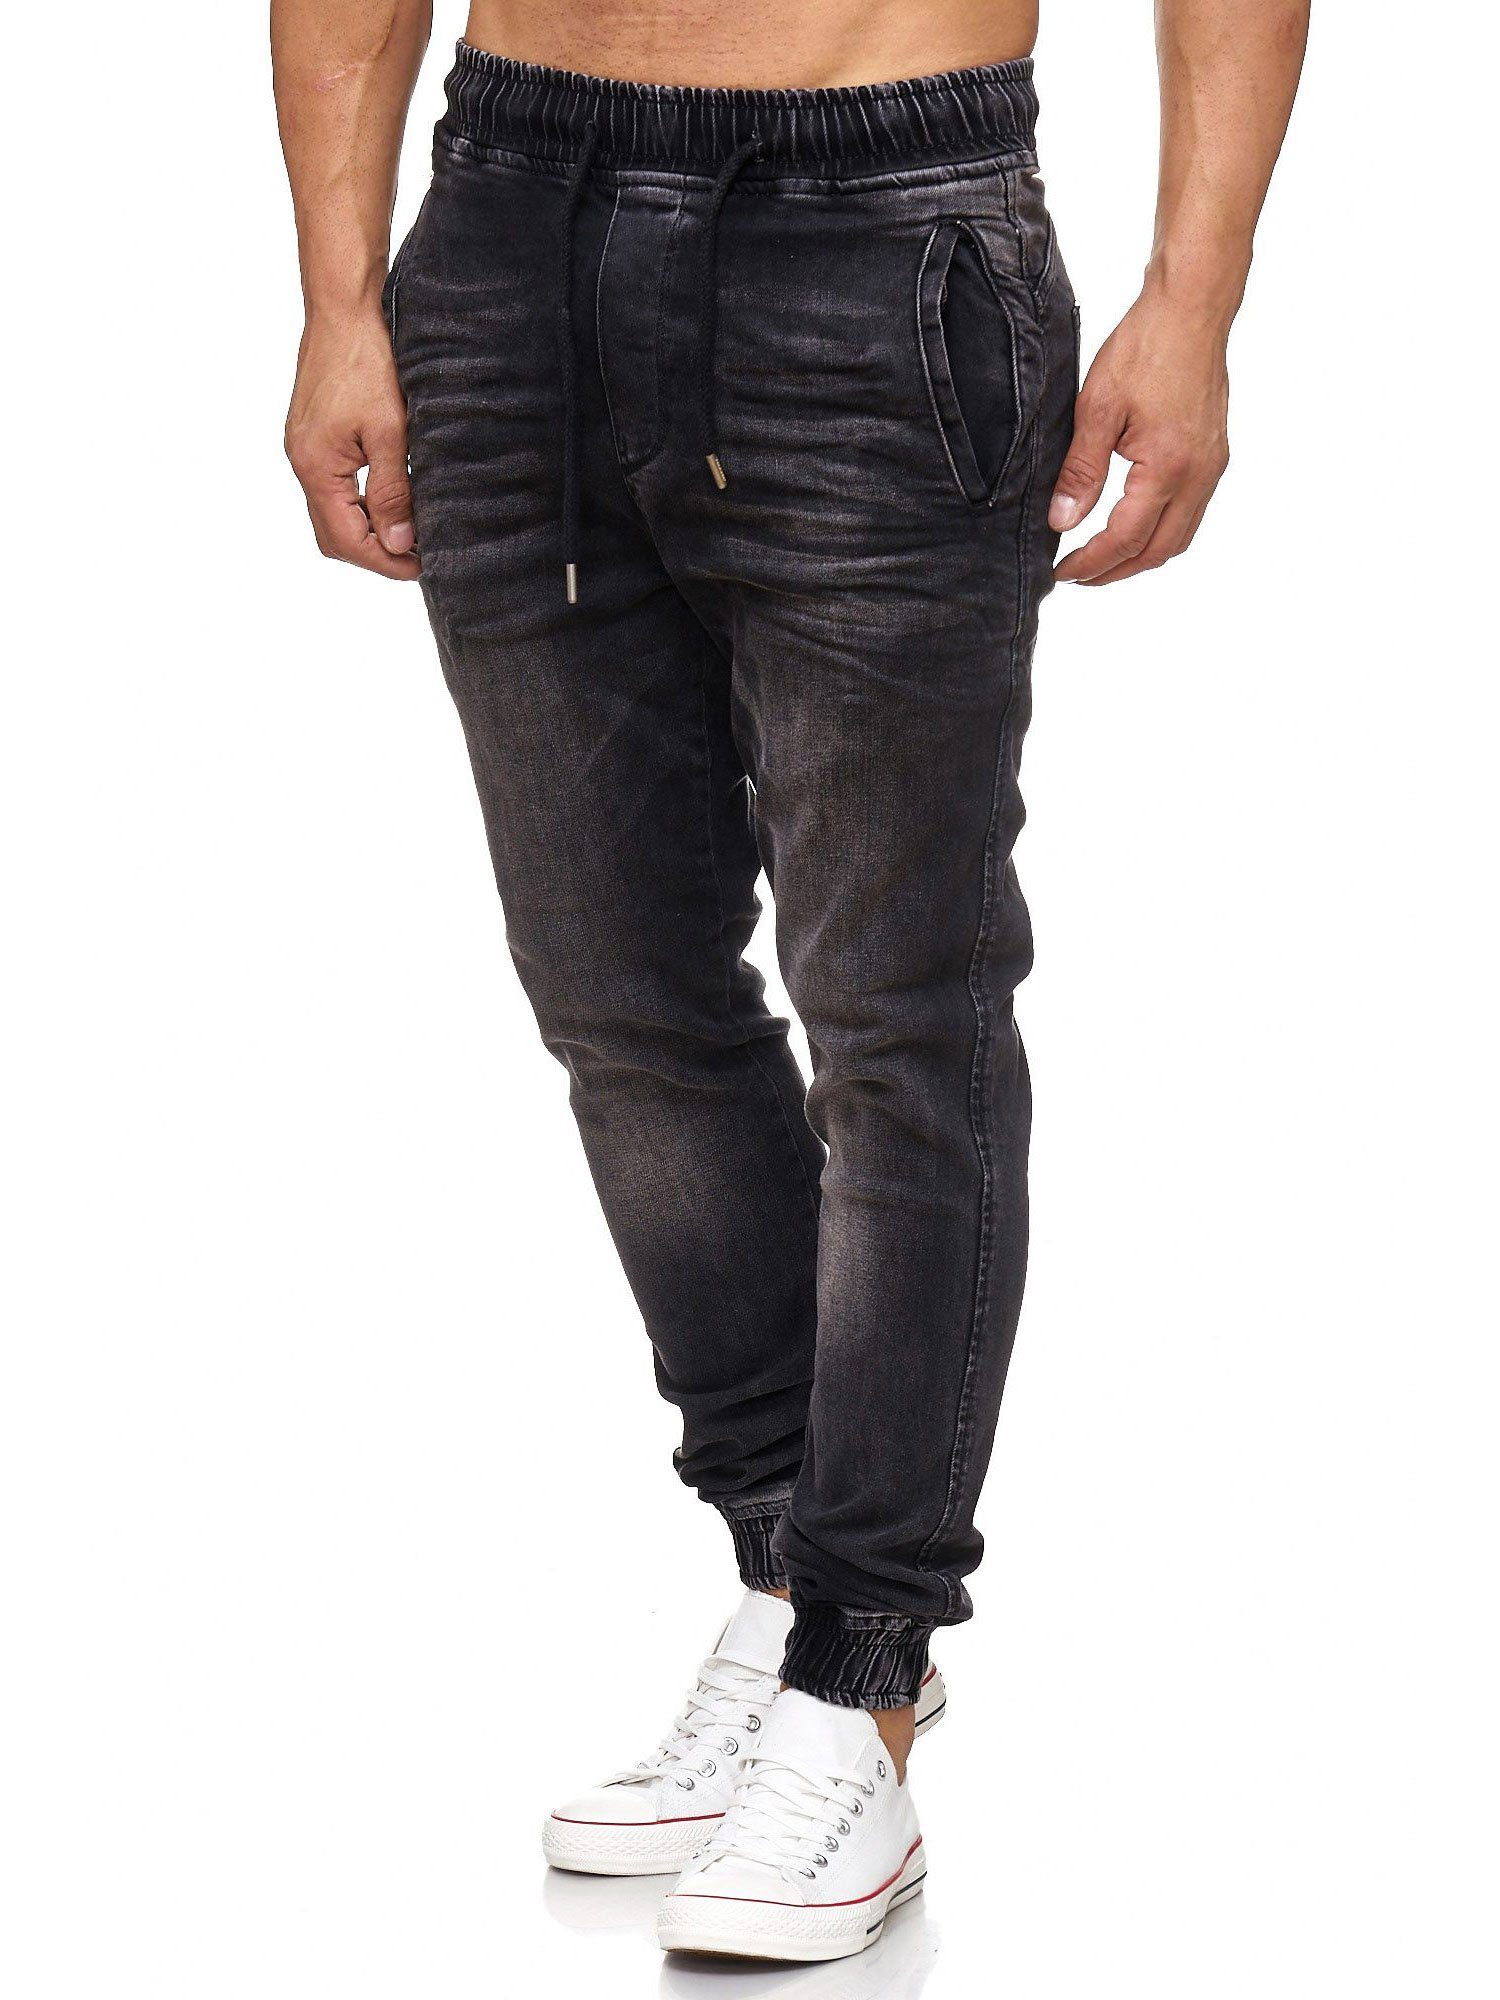 Tazzio Straight-Jeans 17504 Sweat im schwarz Jogger-Stil Hose